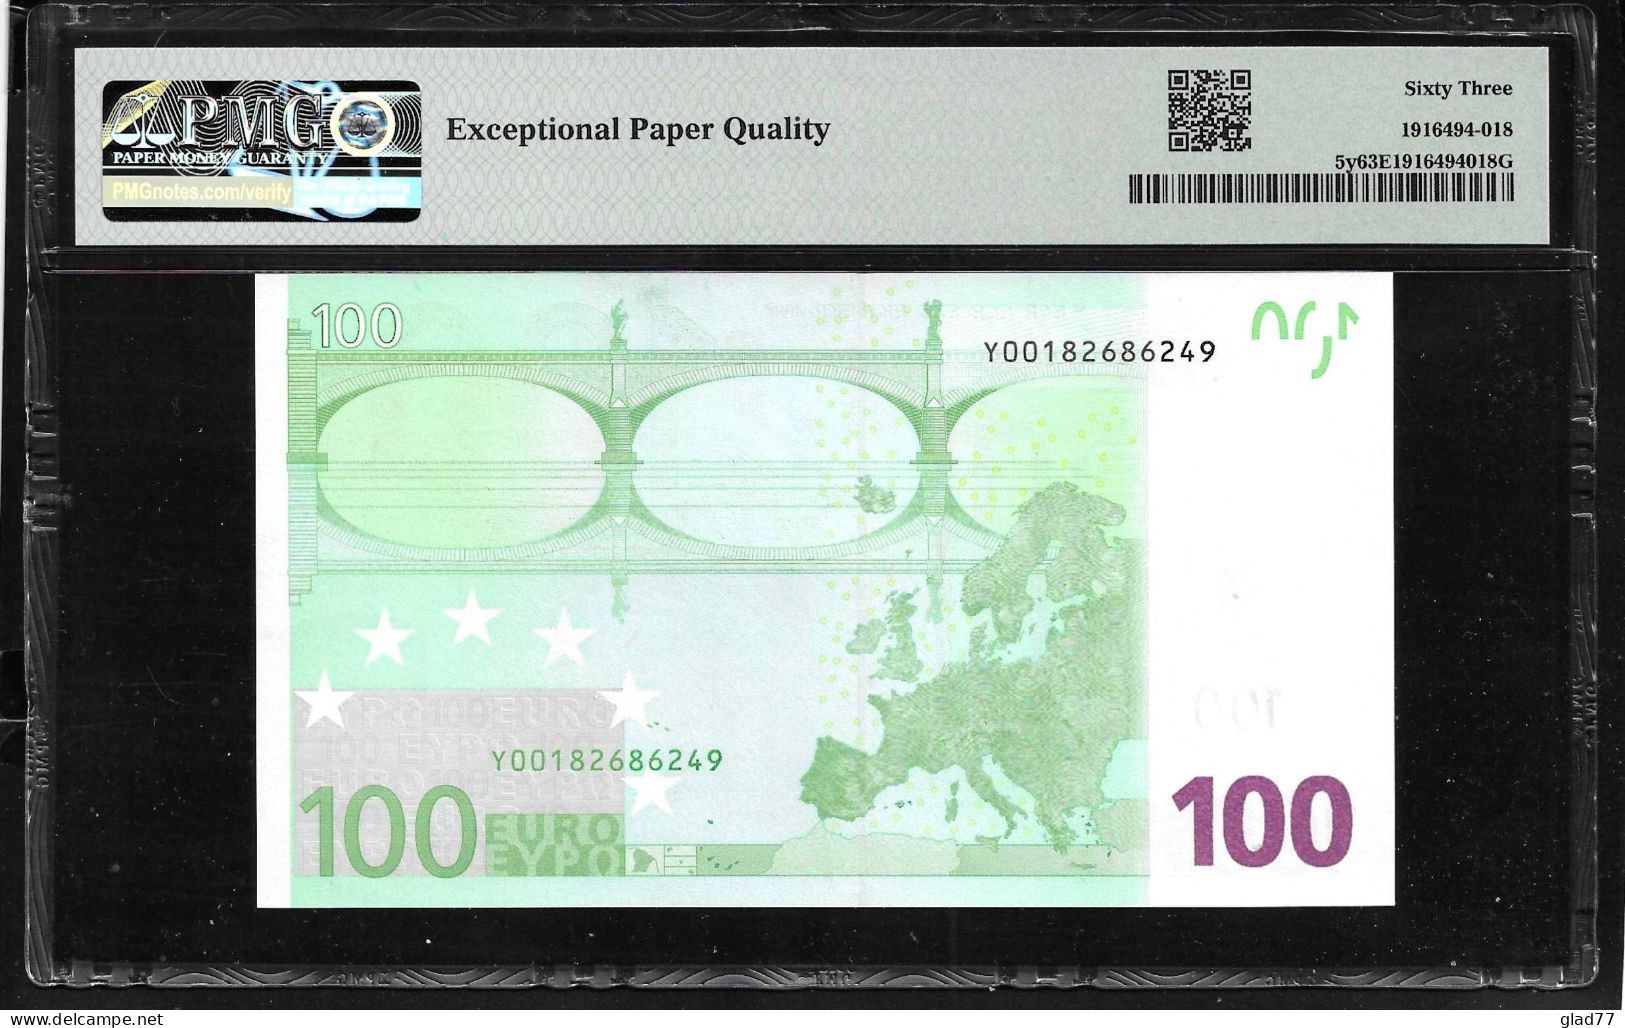 GREECE 100 EURO  Duisenberg  Signature! PMG 63epq Choice UNC "Y" Printer G006E4 Extremely Rare!! - 100 Euro